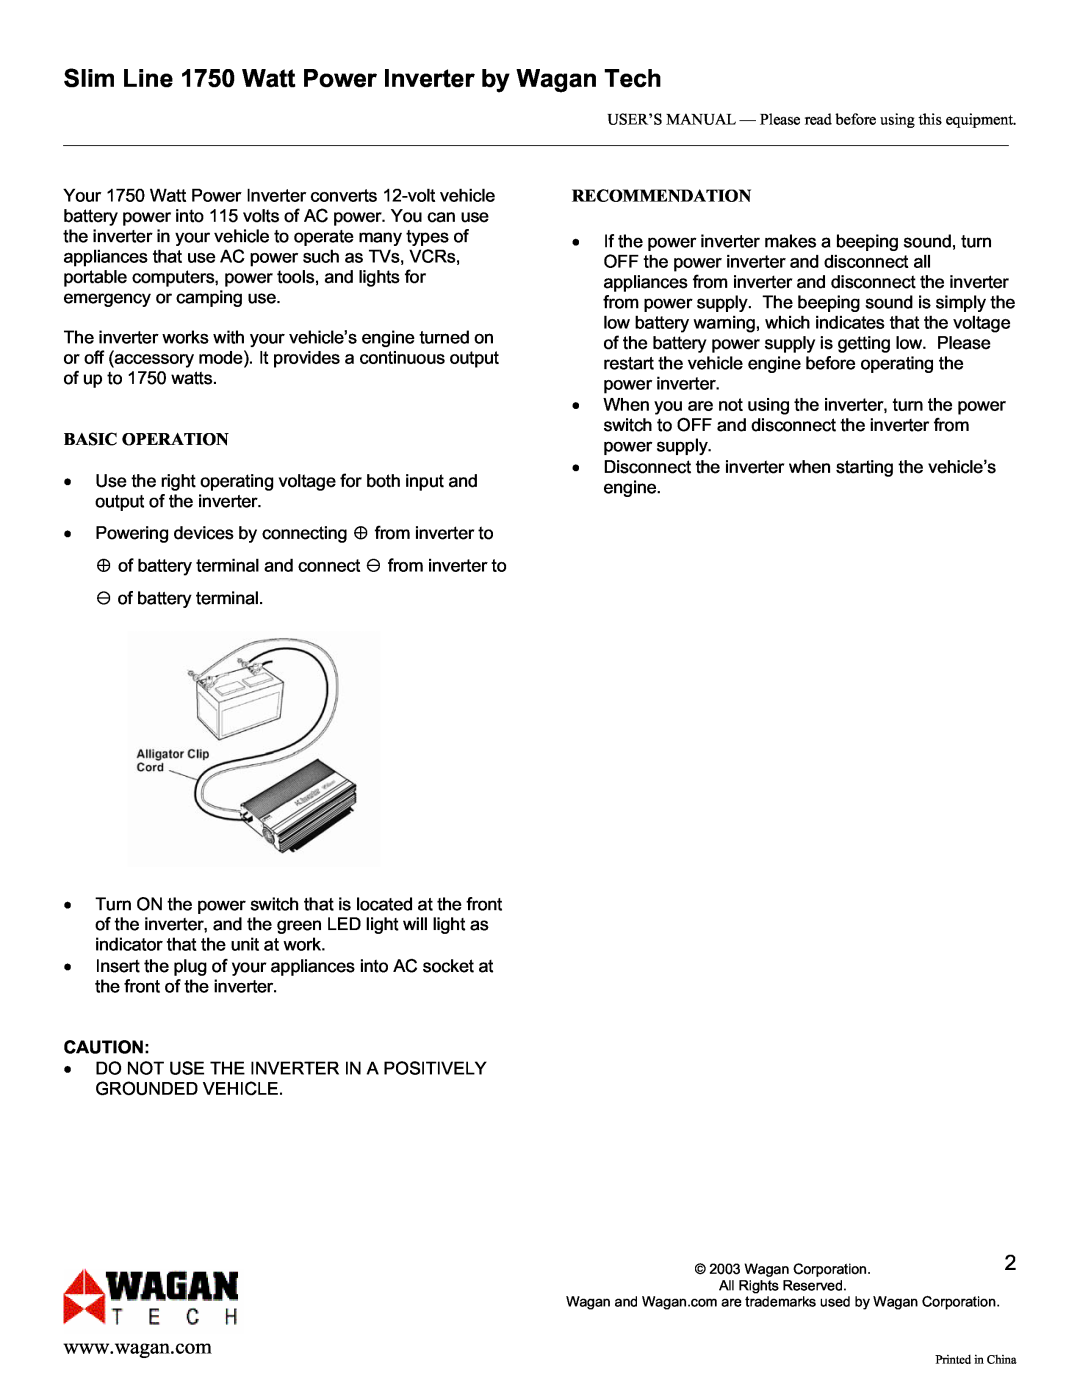 Wagan user manual Slim Line 1750 Watt Power Inverter by Wagan Tech, Basic Operation, Recommendation 